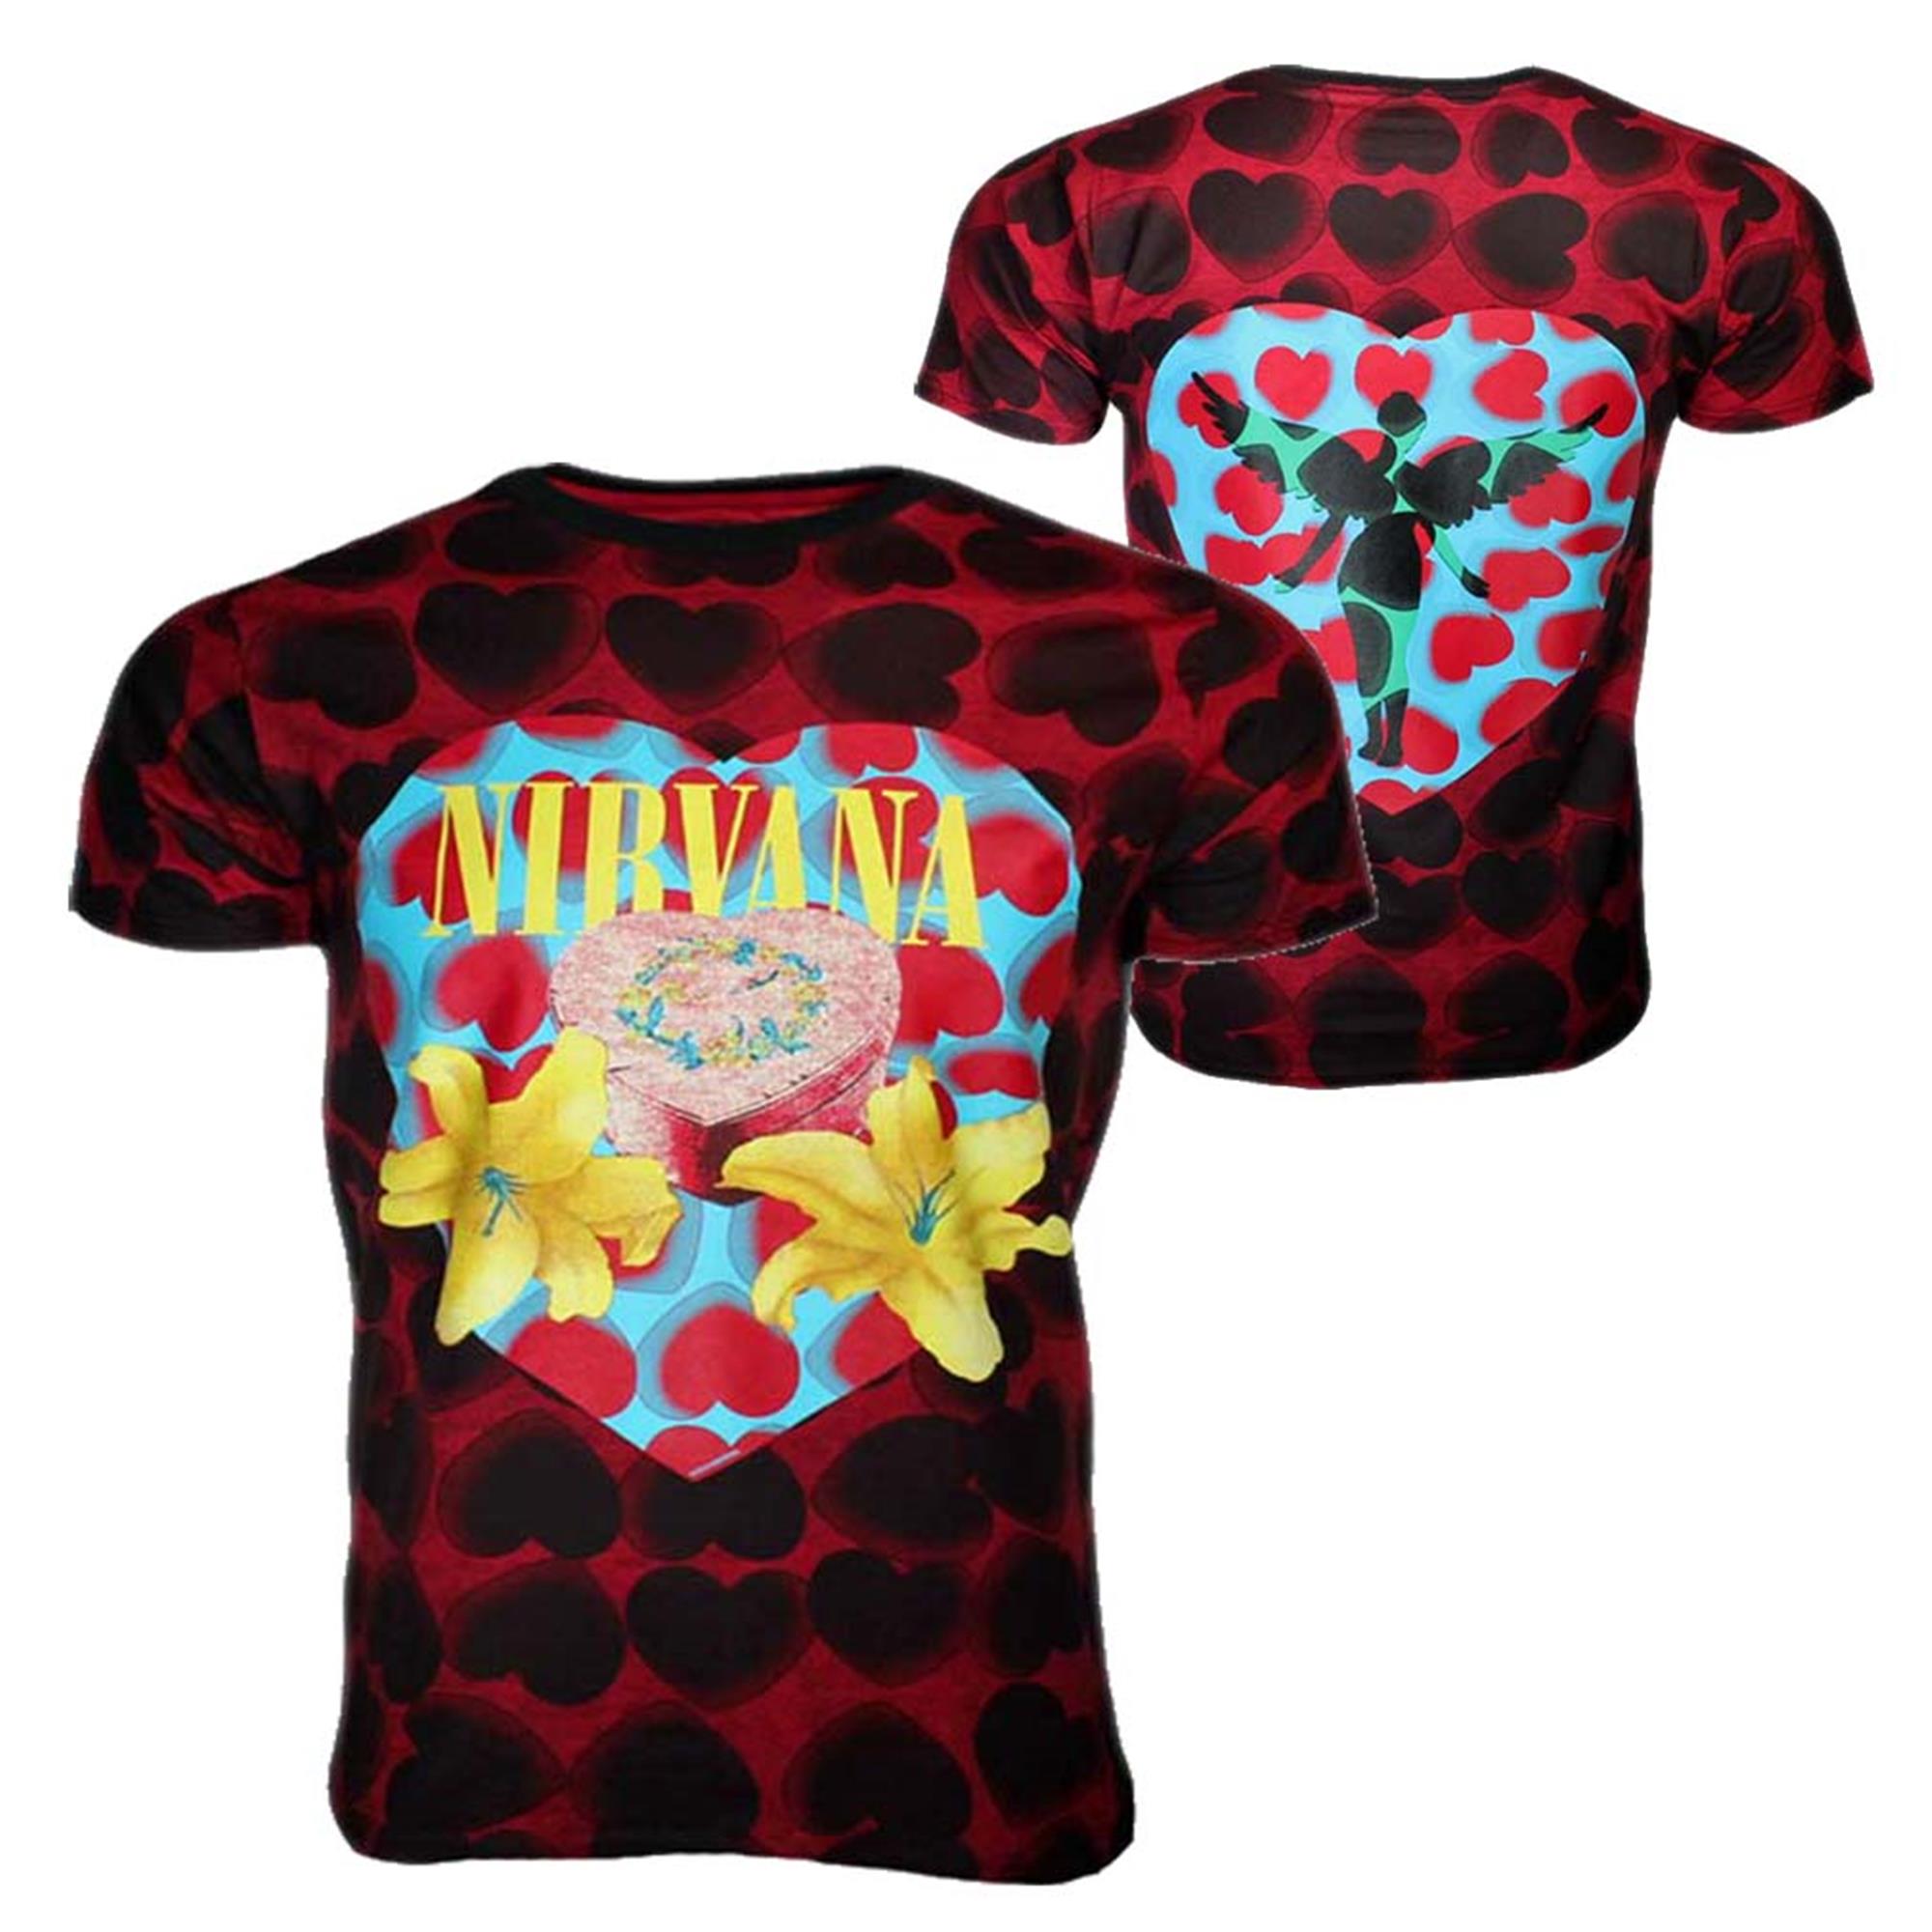 Nirvana Heart Shaped Box Men's Dye T-Shirt